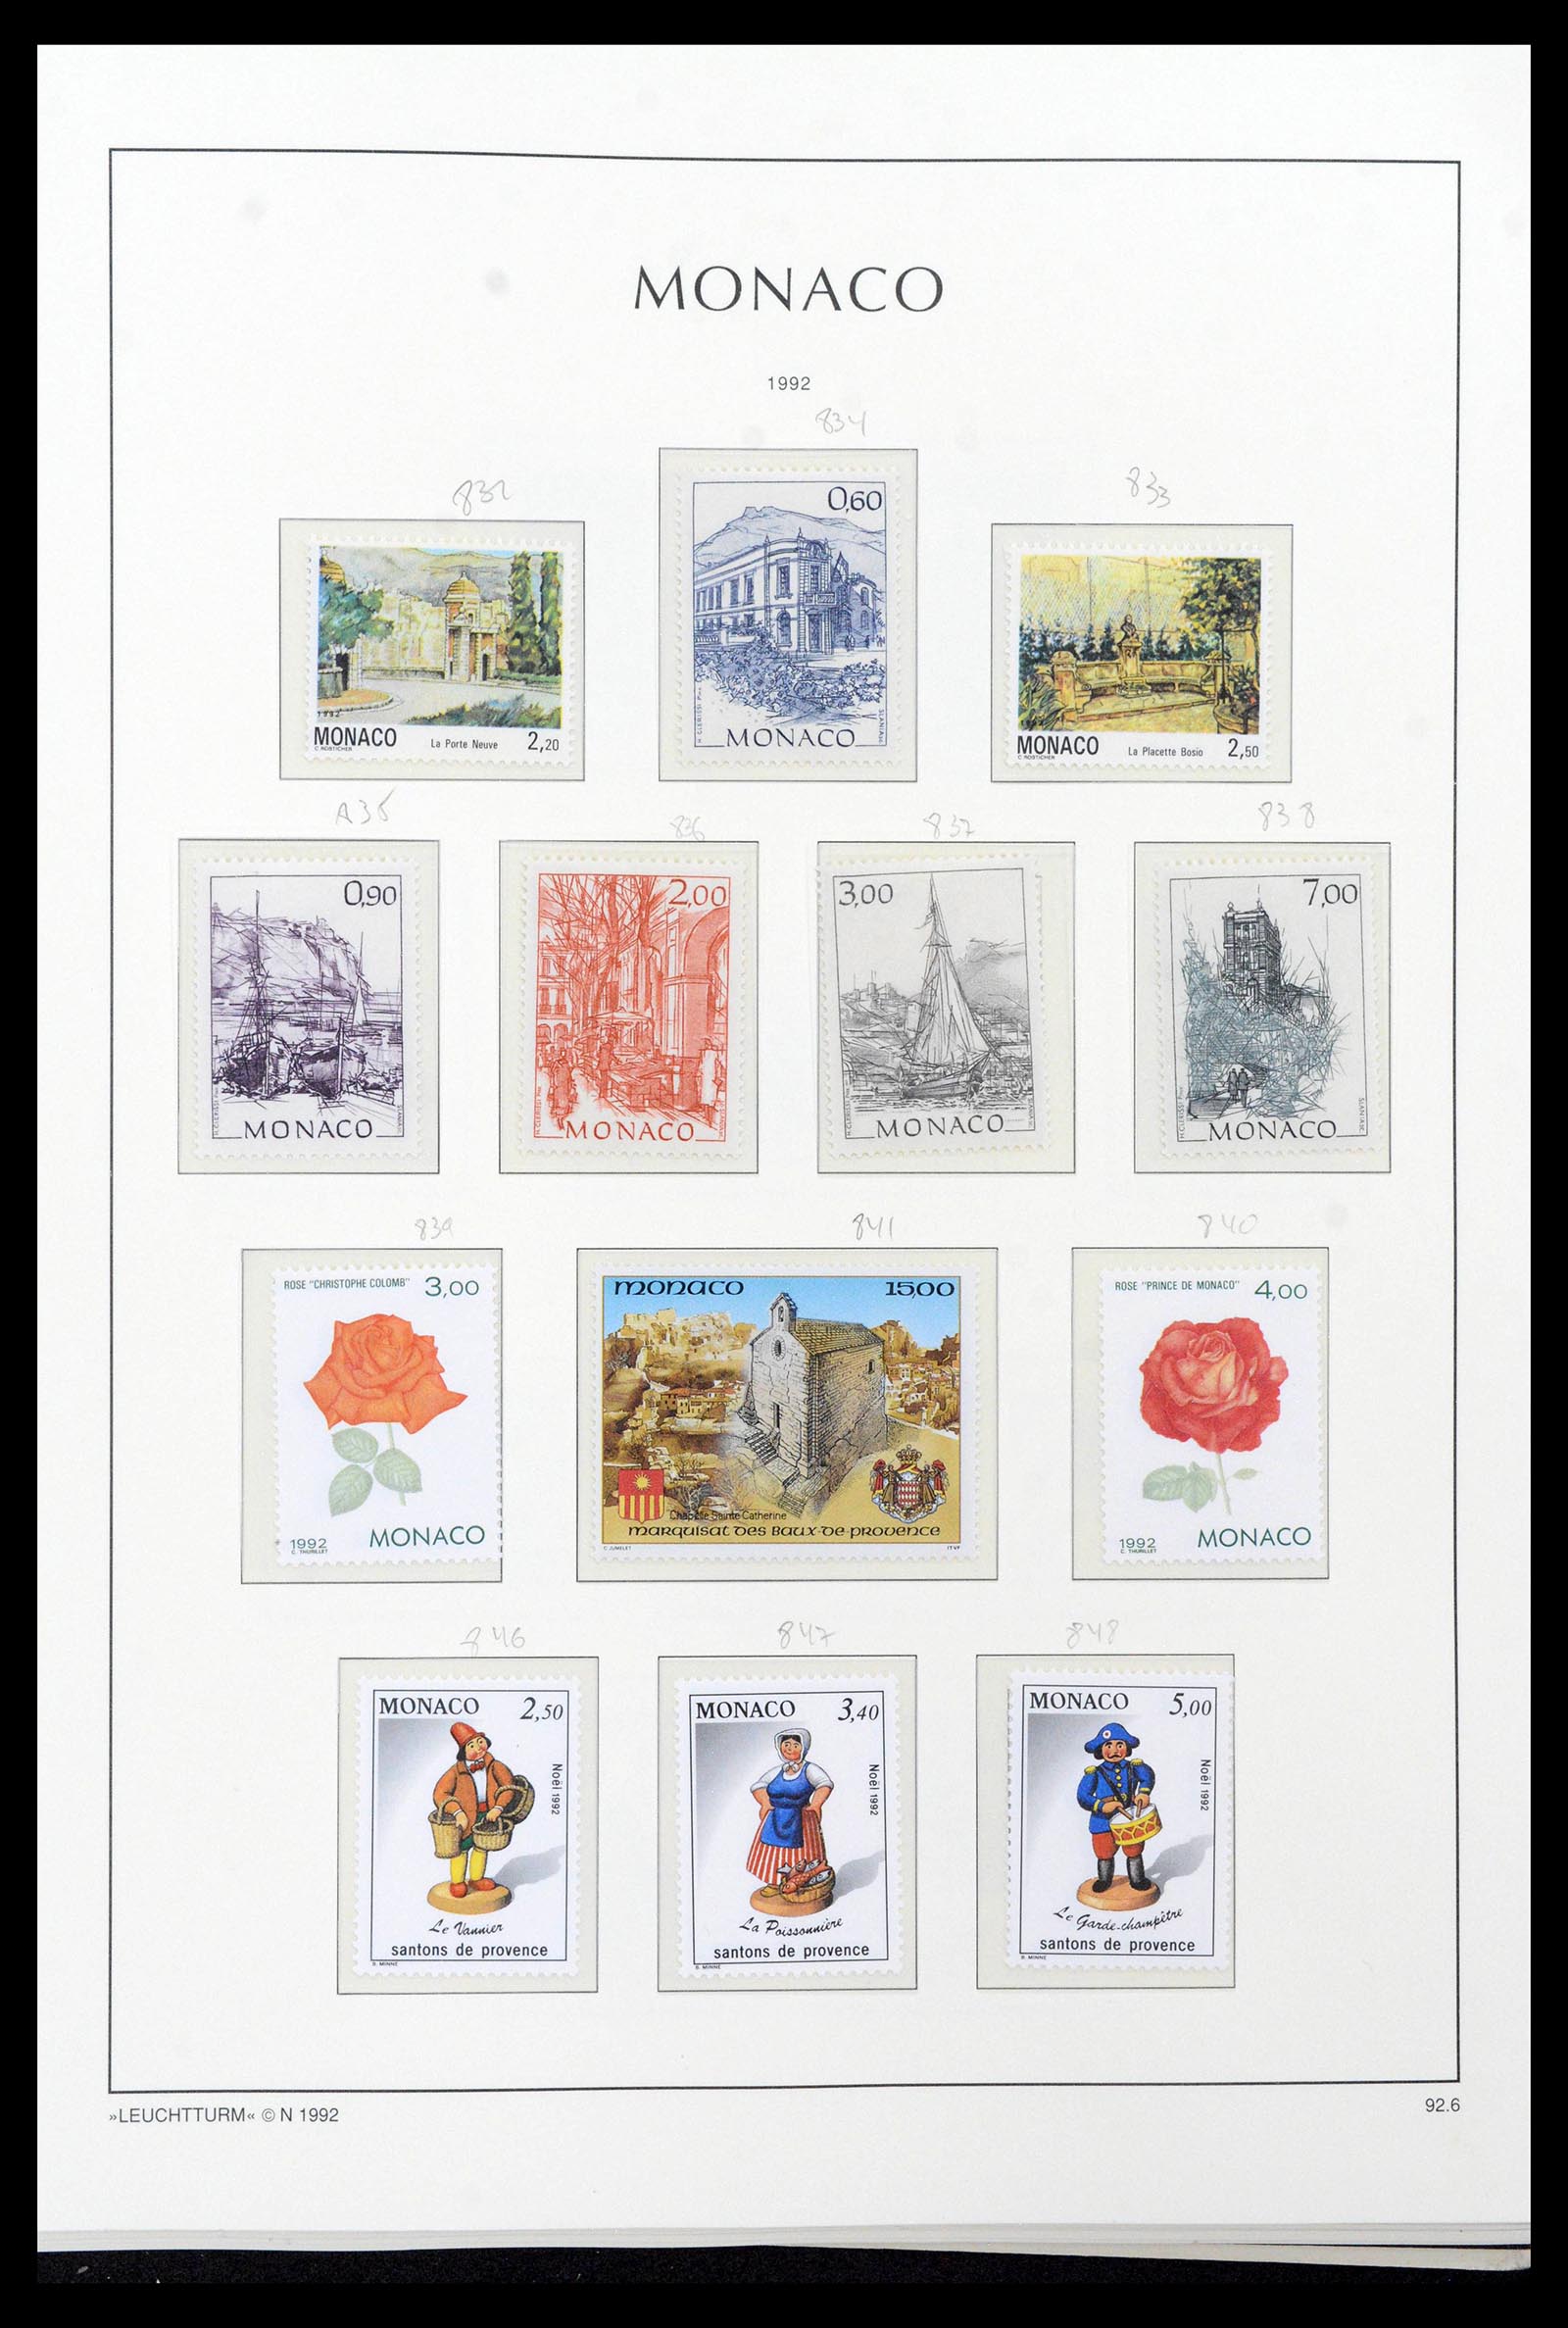 39250 0261 - Stamp collection 39250 Monaco 1885-1995.